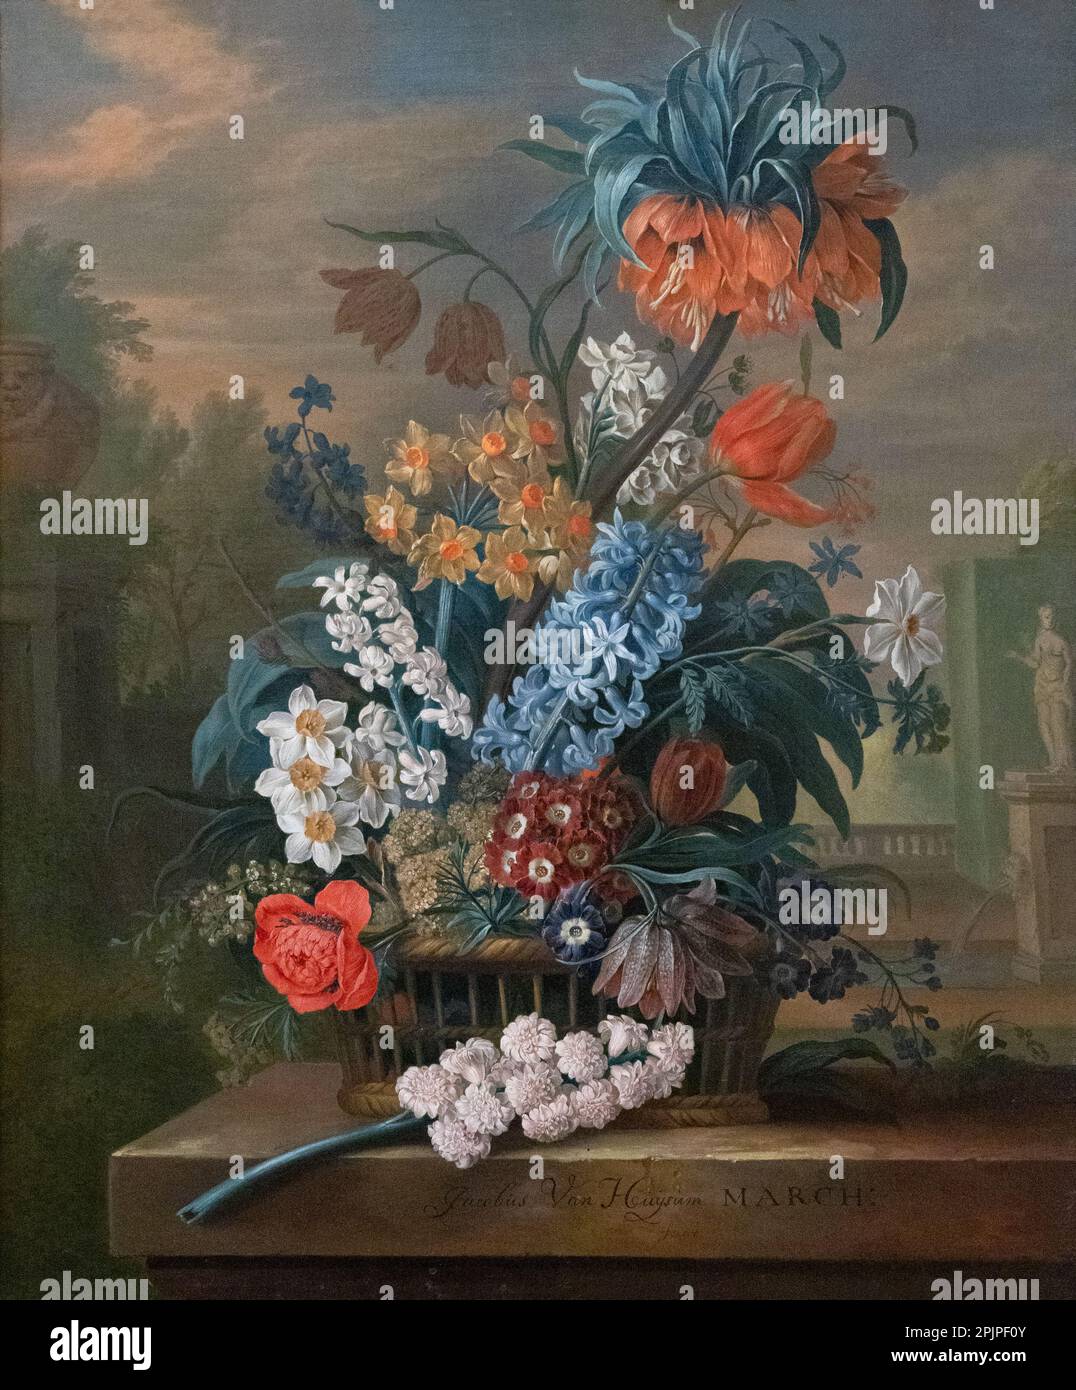 Jacobus van Huysum painting, aka. Jacob van Huysum; 'The Month of March'; Still life painting; dutch botanical painter of the 18th century. Stock Photo